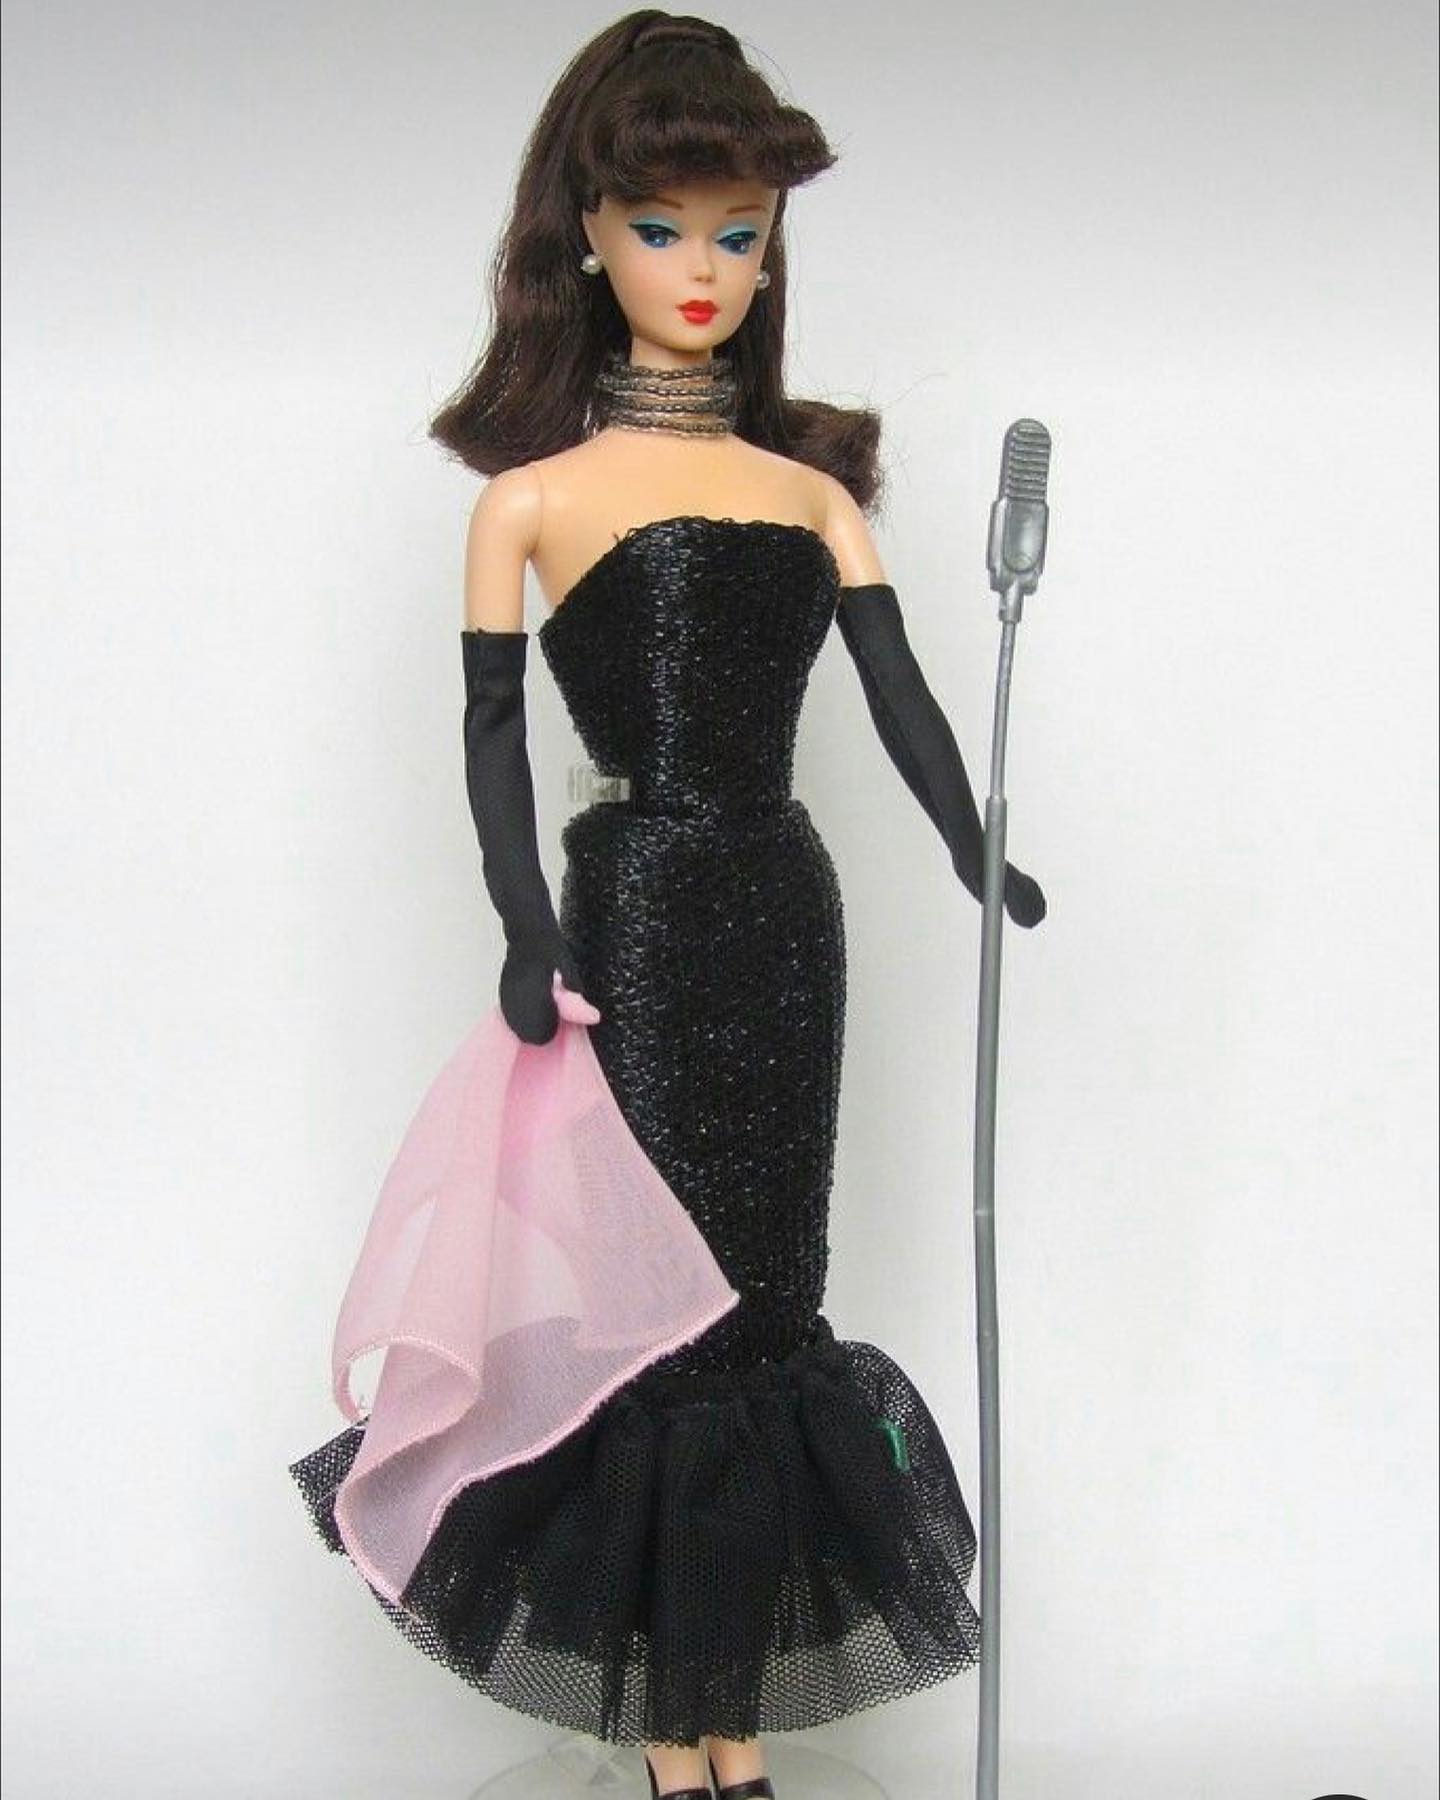 My favorite #barbie 💗🖤🎙️ #happyhalloween